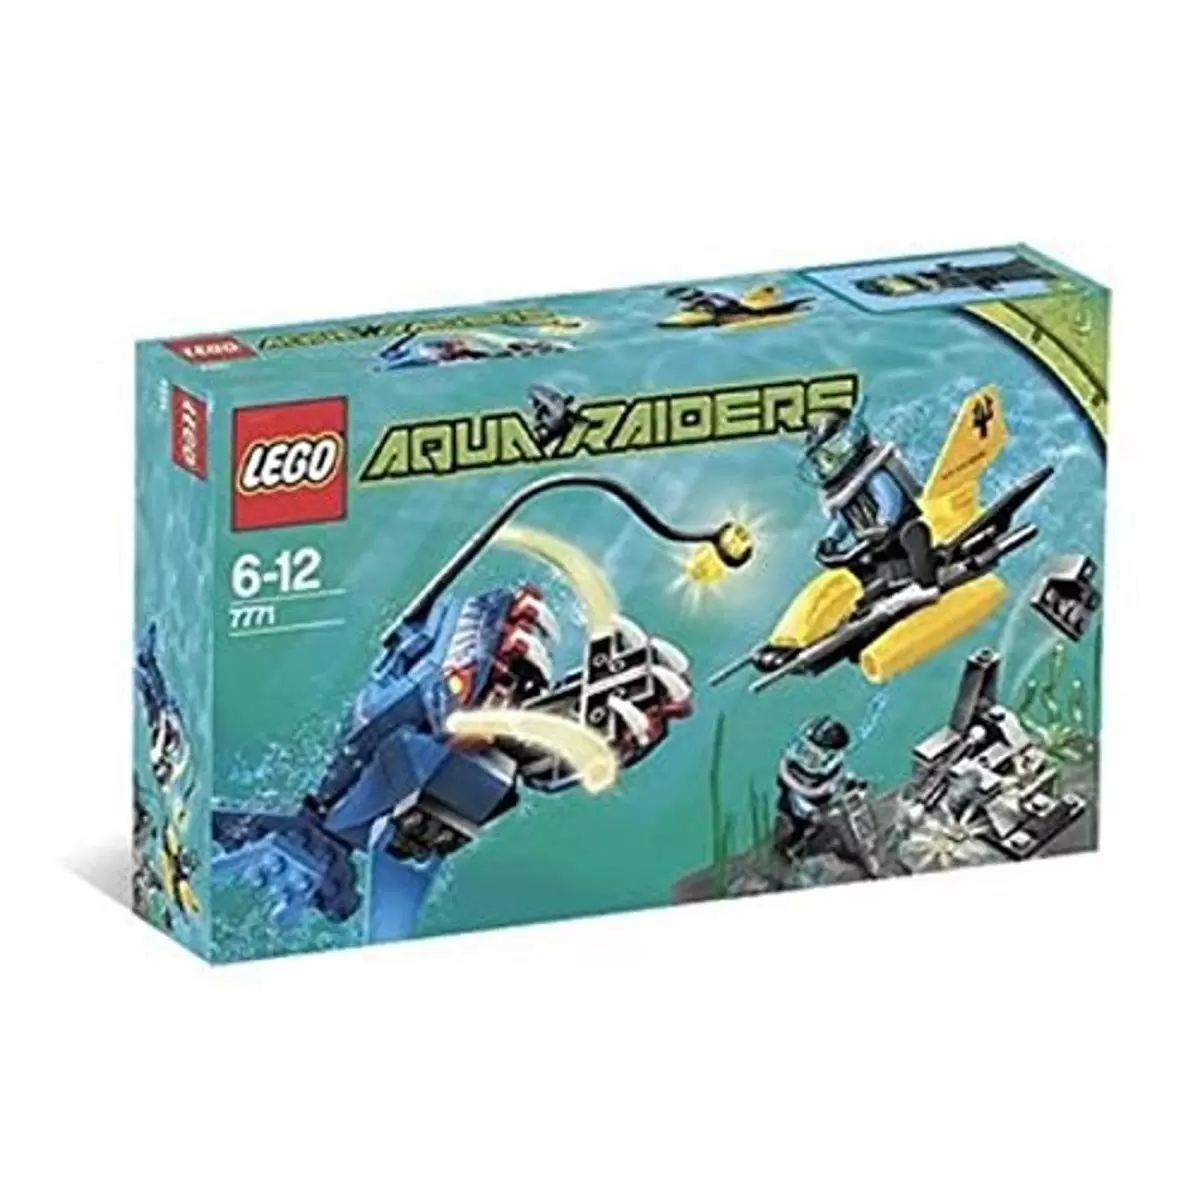 LEGO Aqua Raiders - Angler Ambush